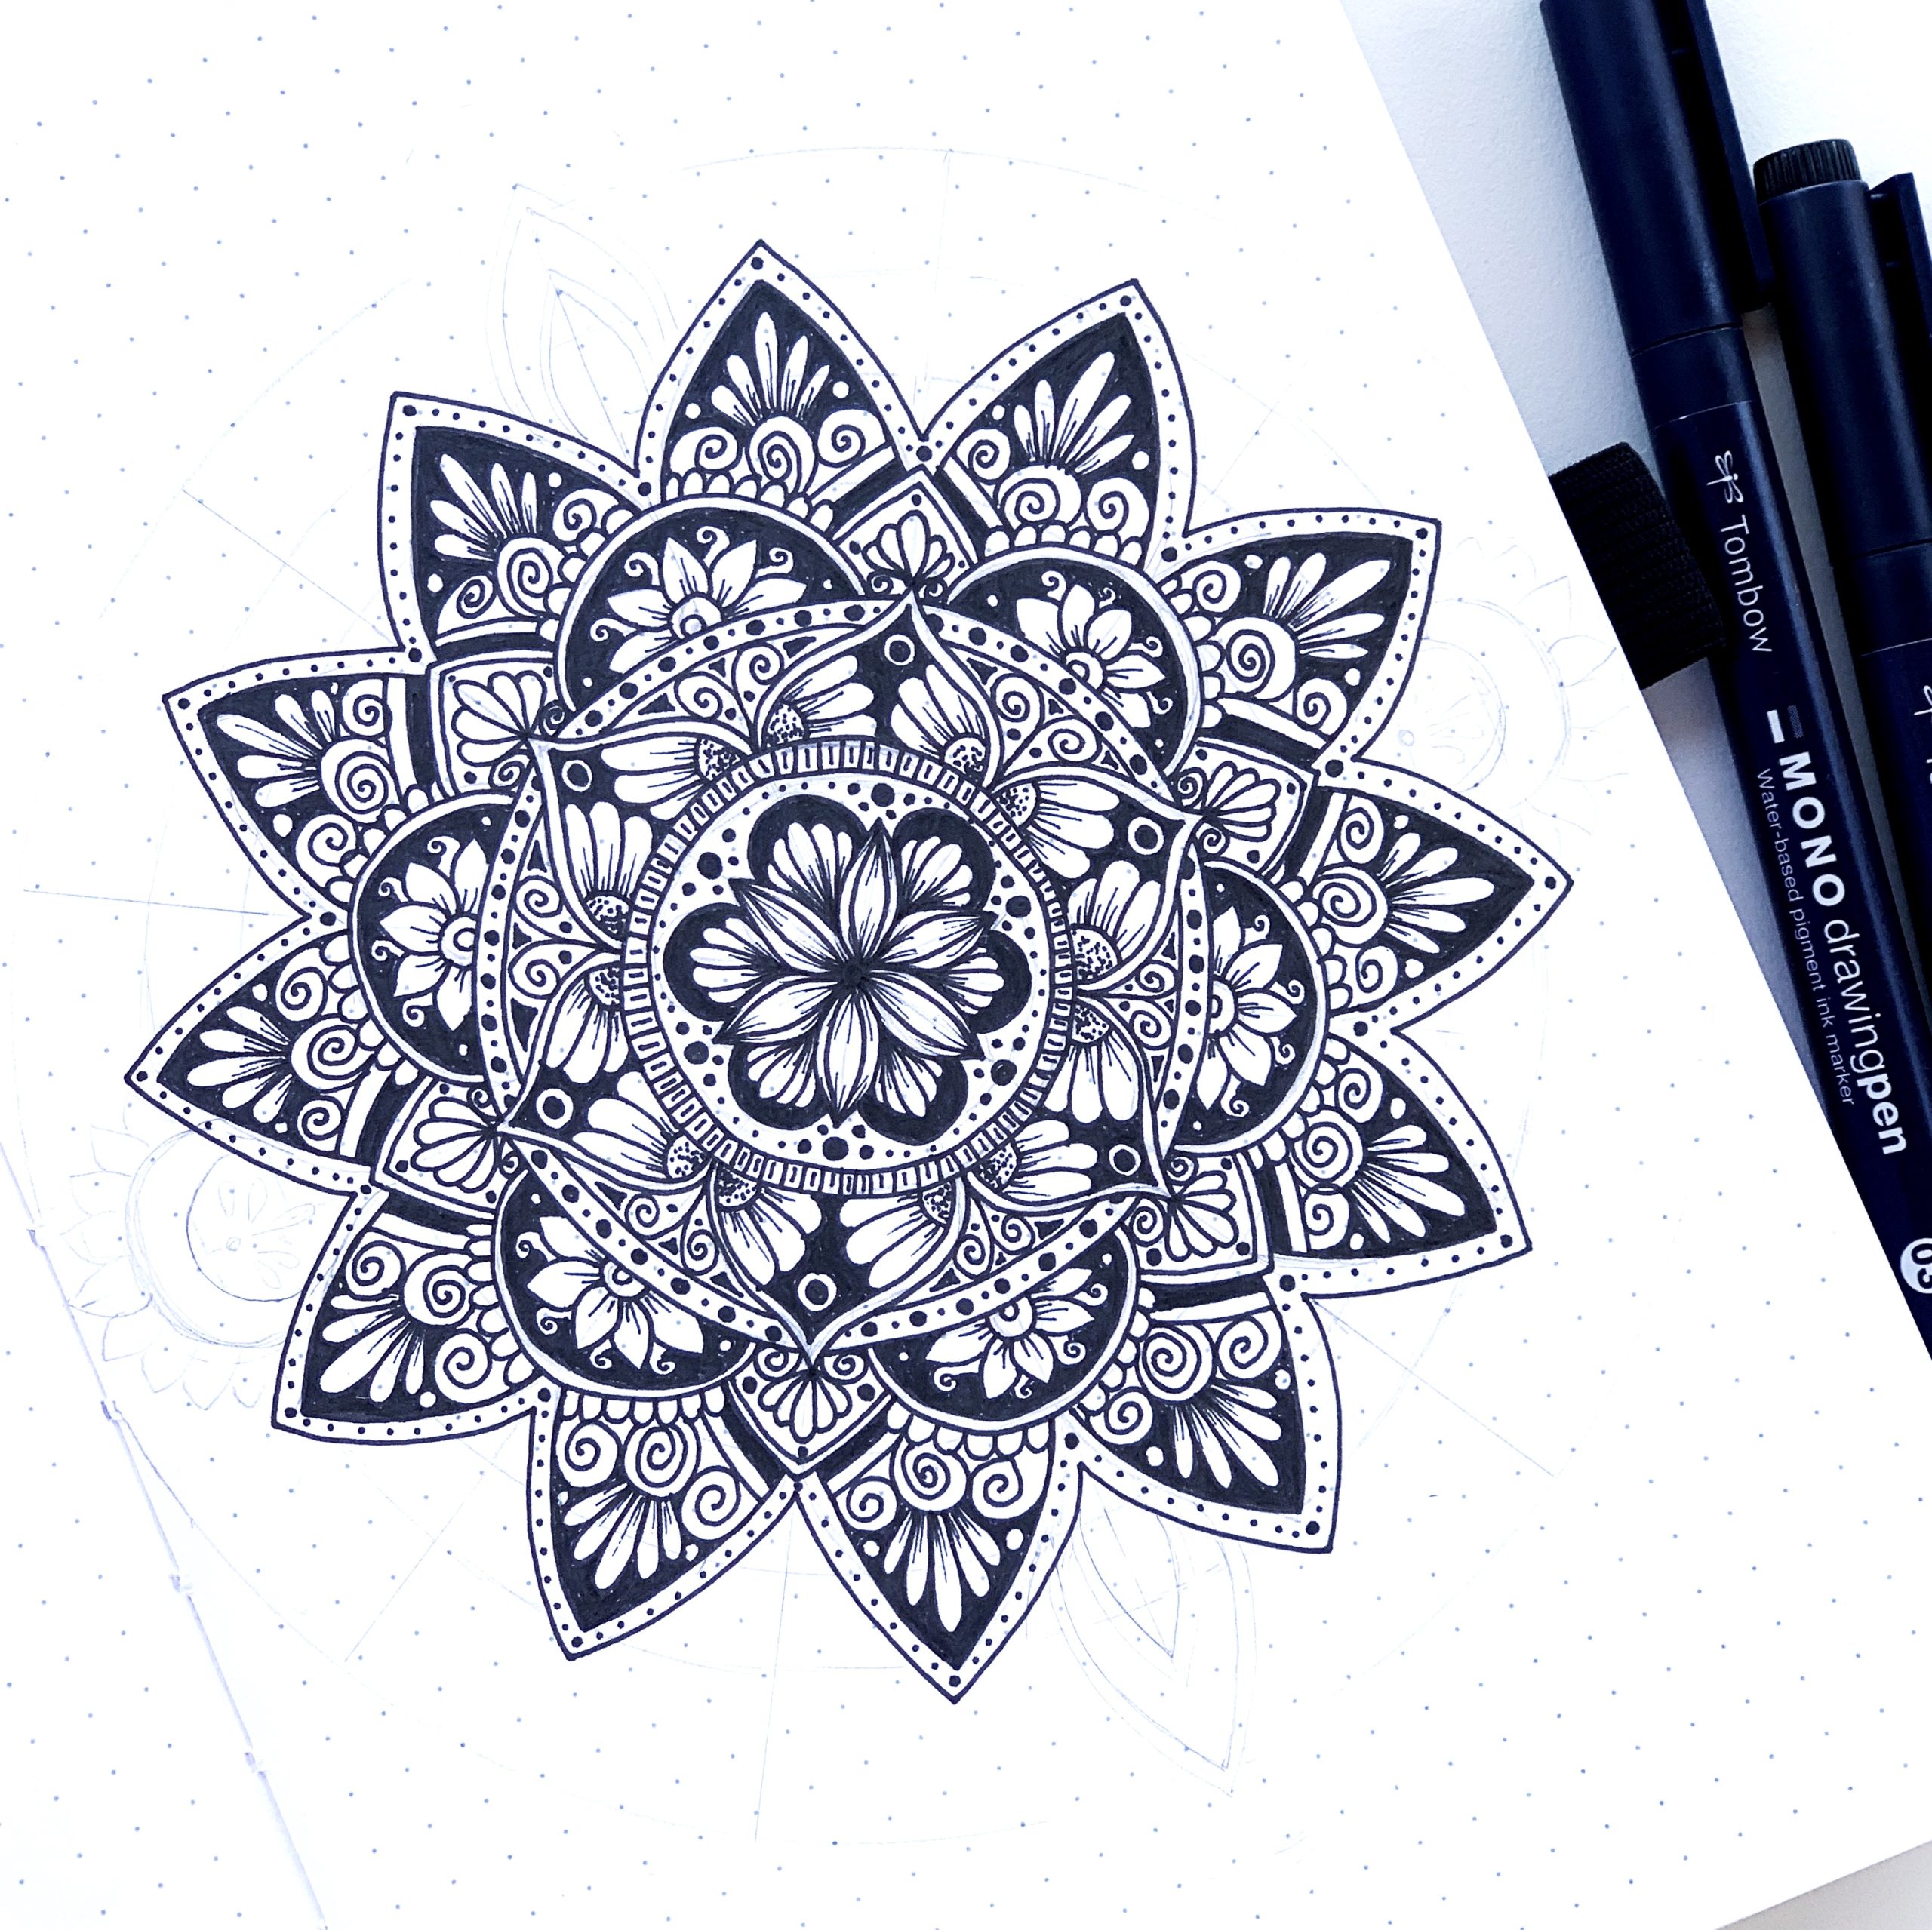 Learn to draw easy mandala art